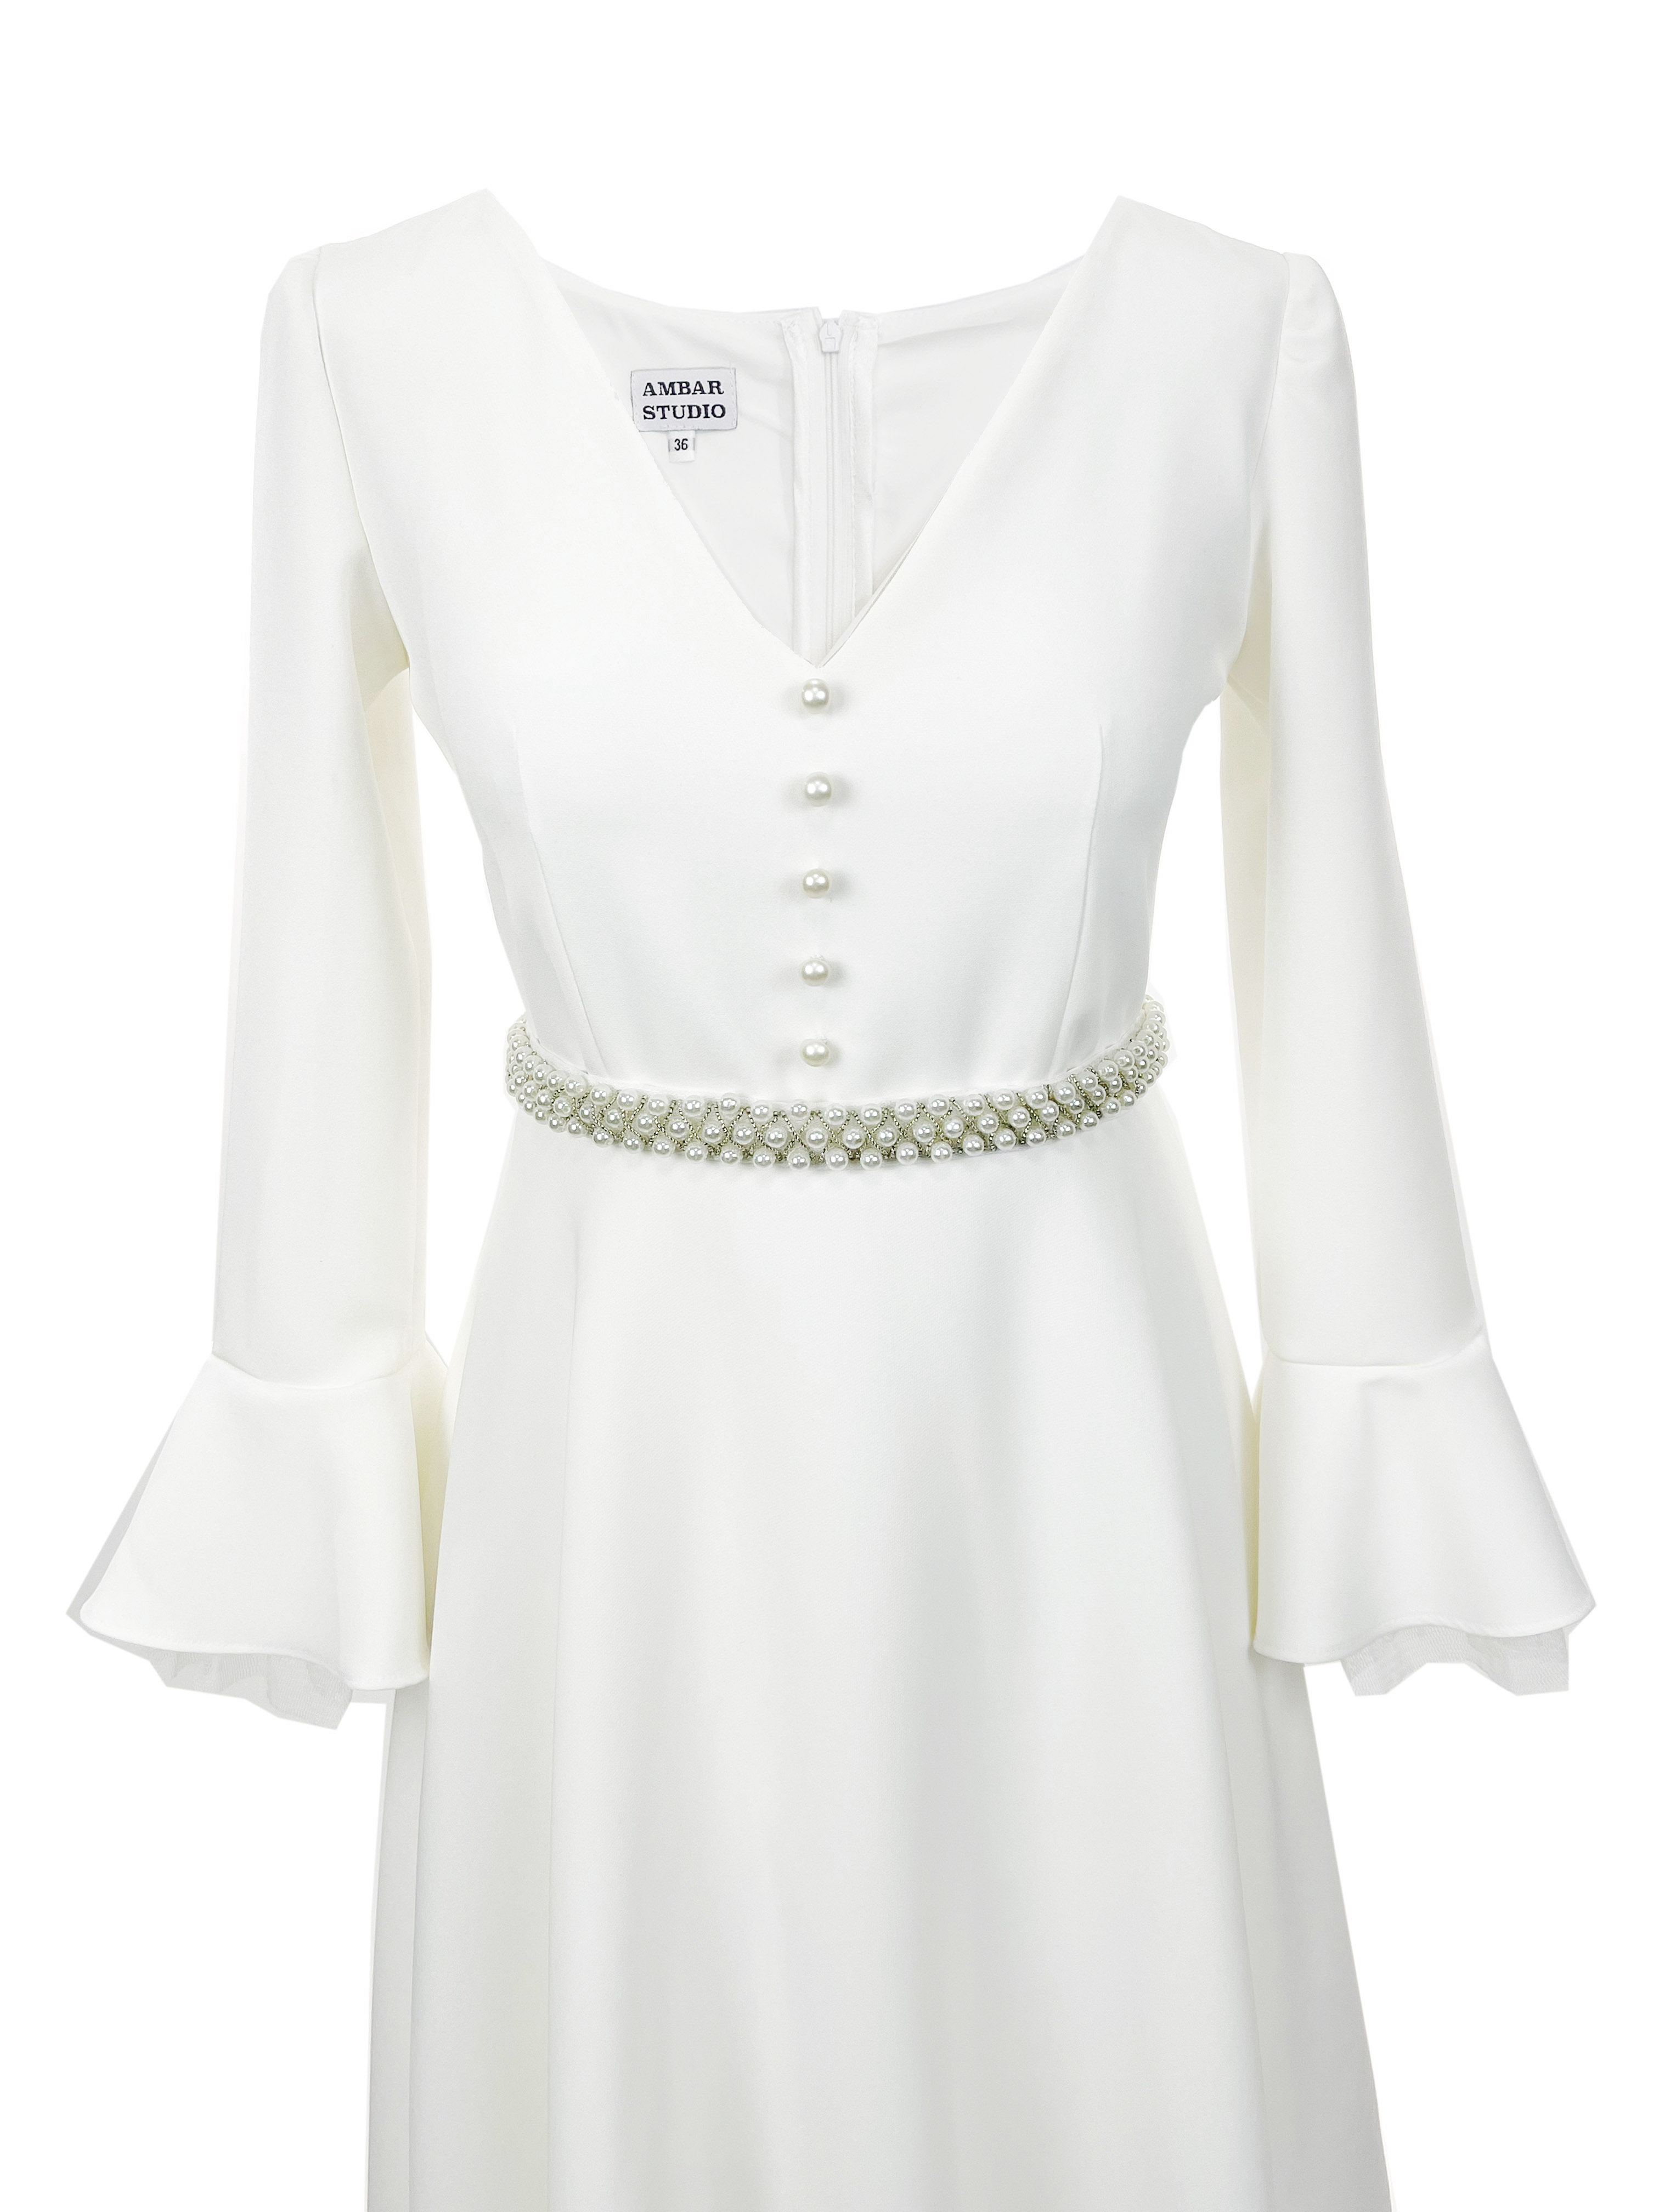 R23171 - WHITE 01 - MATHILDE white midi dress with pearls - AMBAR STUDIO